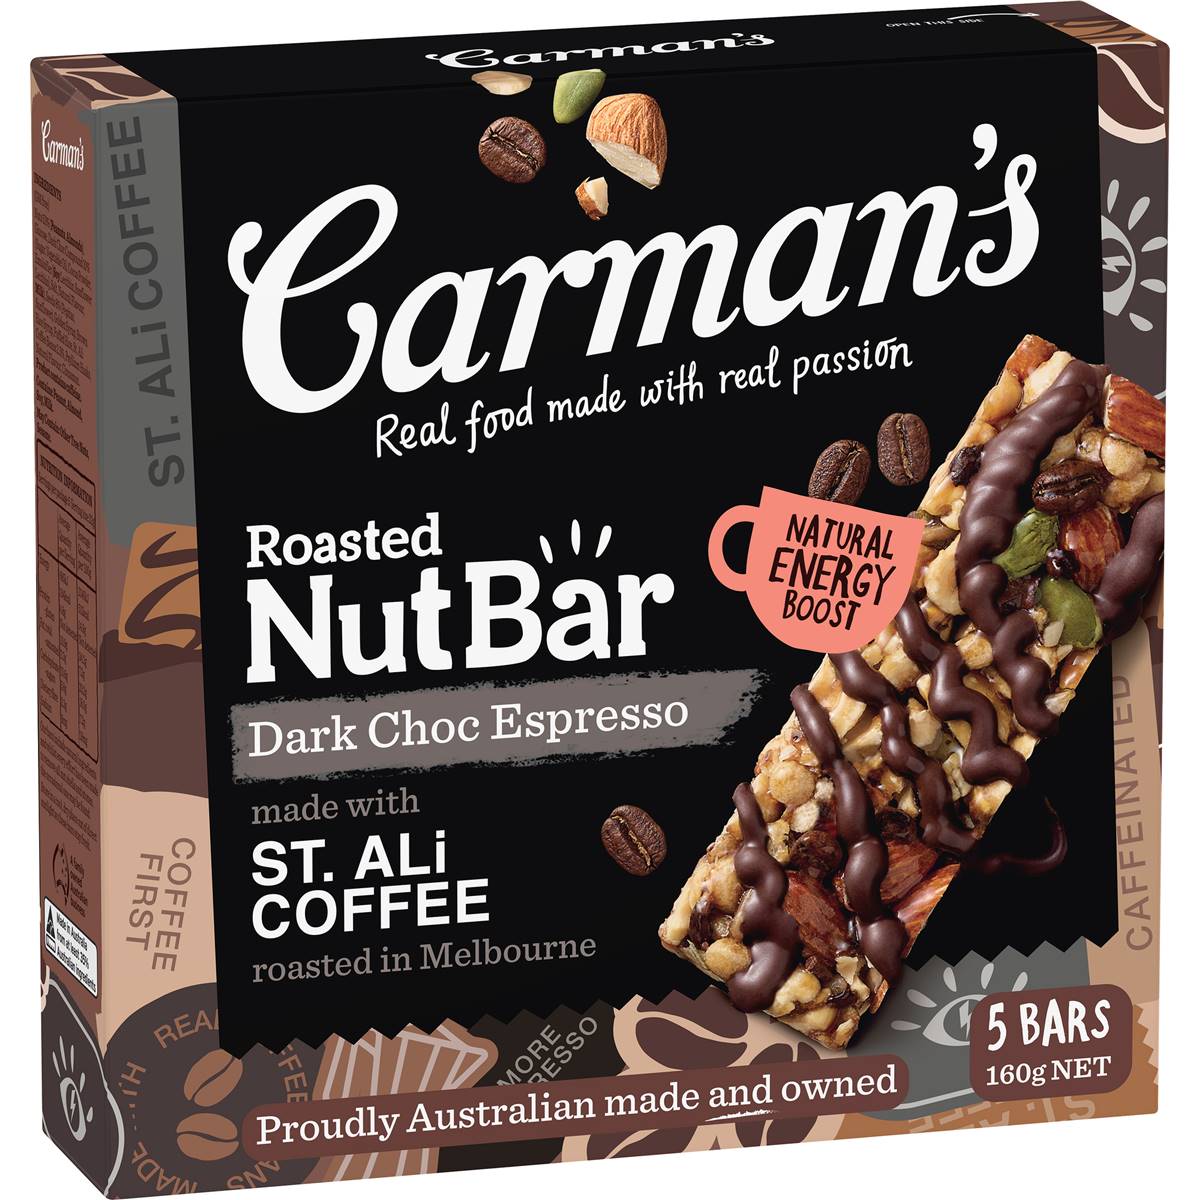 Calories in Carman's Dark Choc Espresso Nut Bars